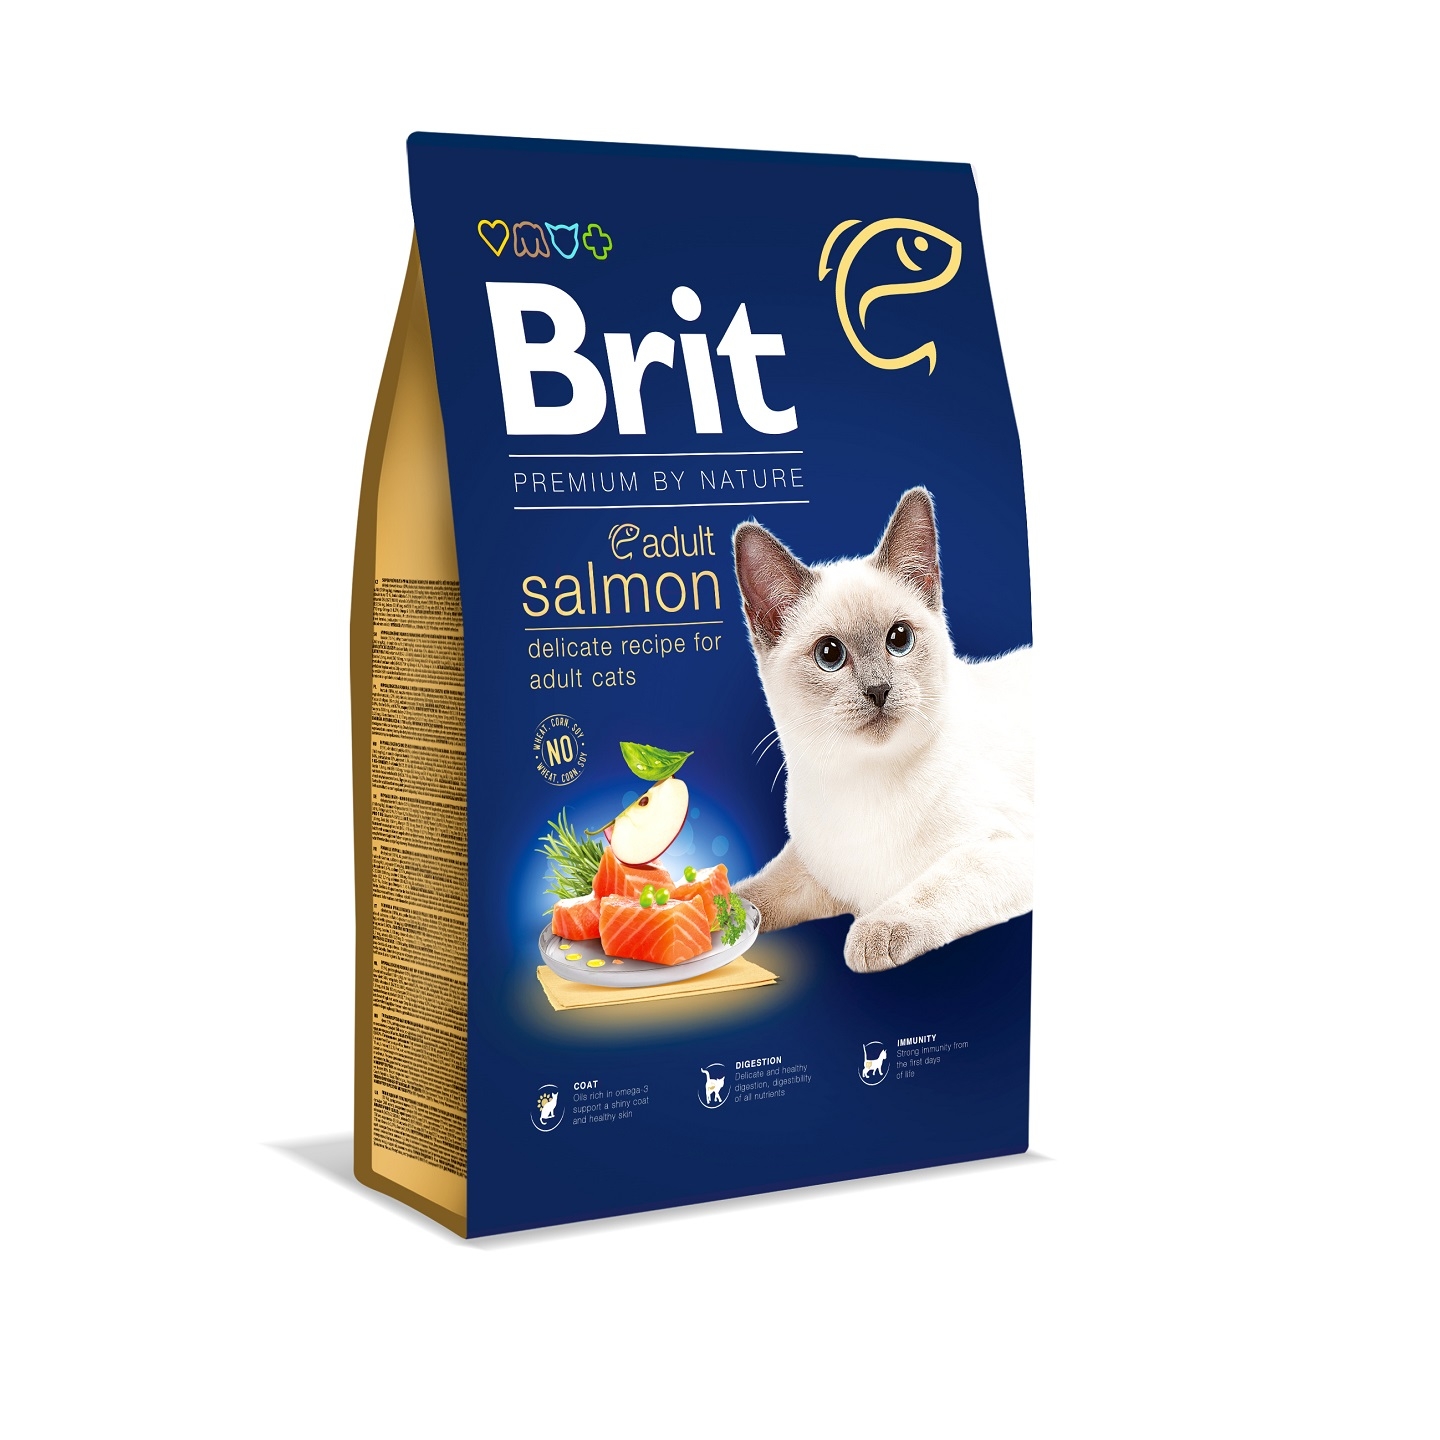 Brit Premium by Nature Cat Adult Salmon, 8 kg Brit